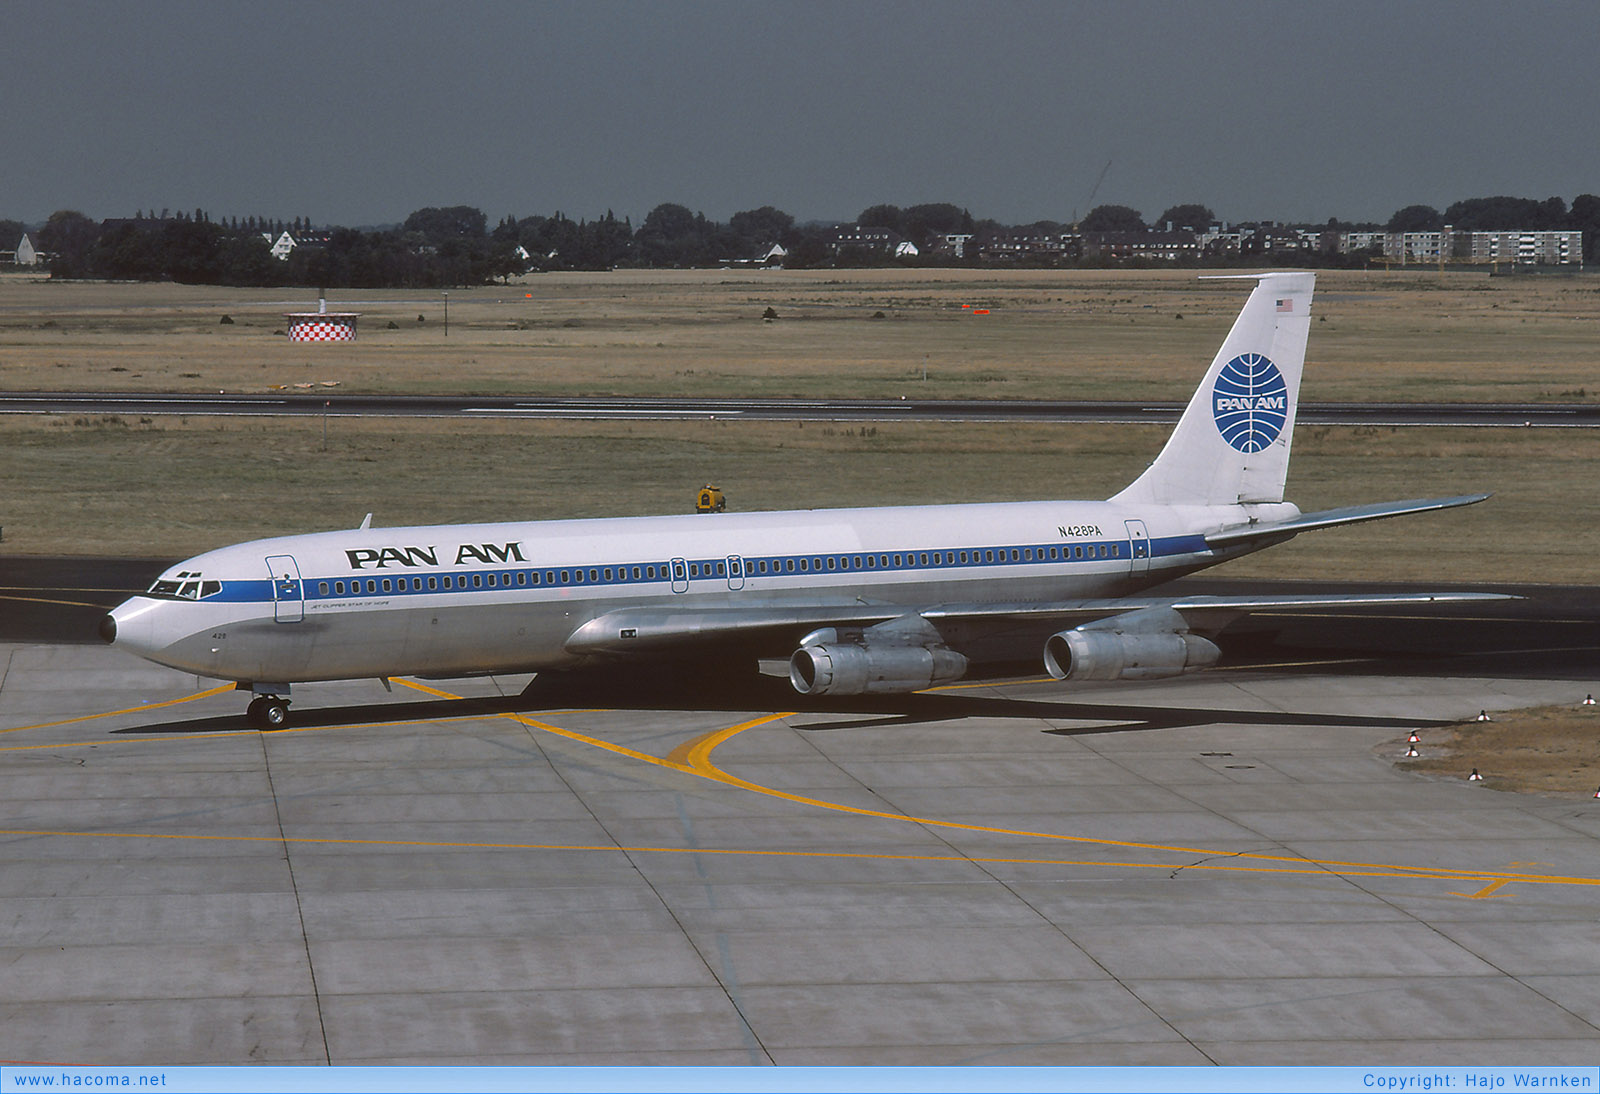 Photo of N428PA - Pan Am Clipper Star of Hope - Dusseldorf Airport - Jul 1976